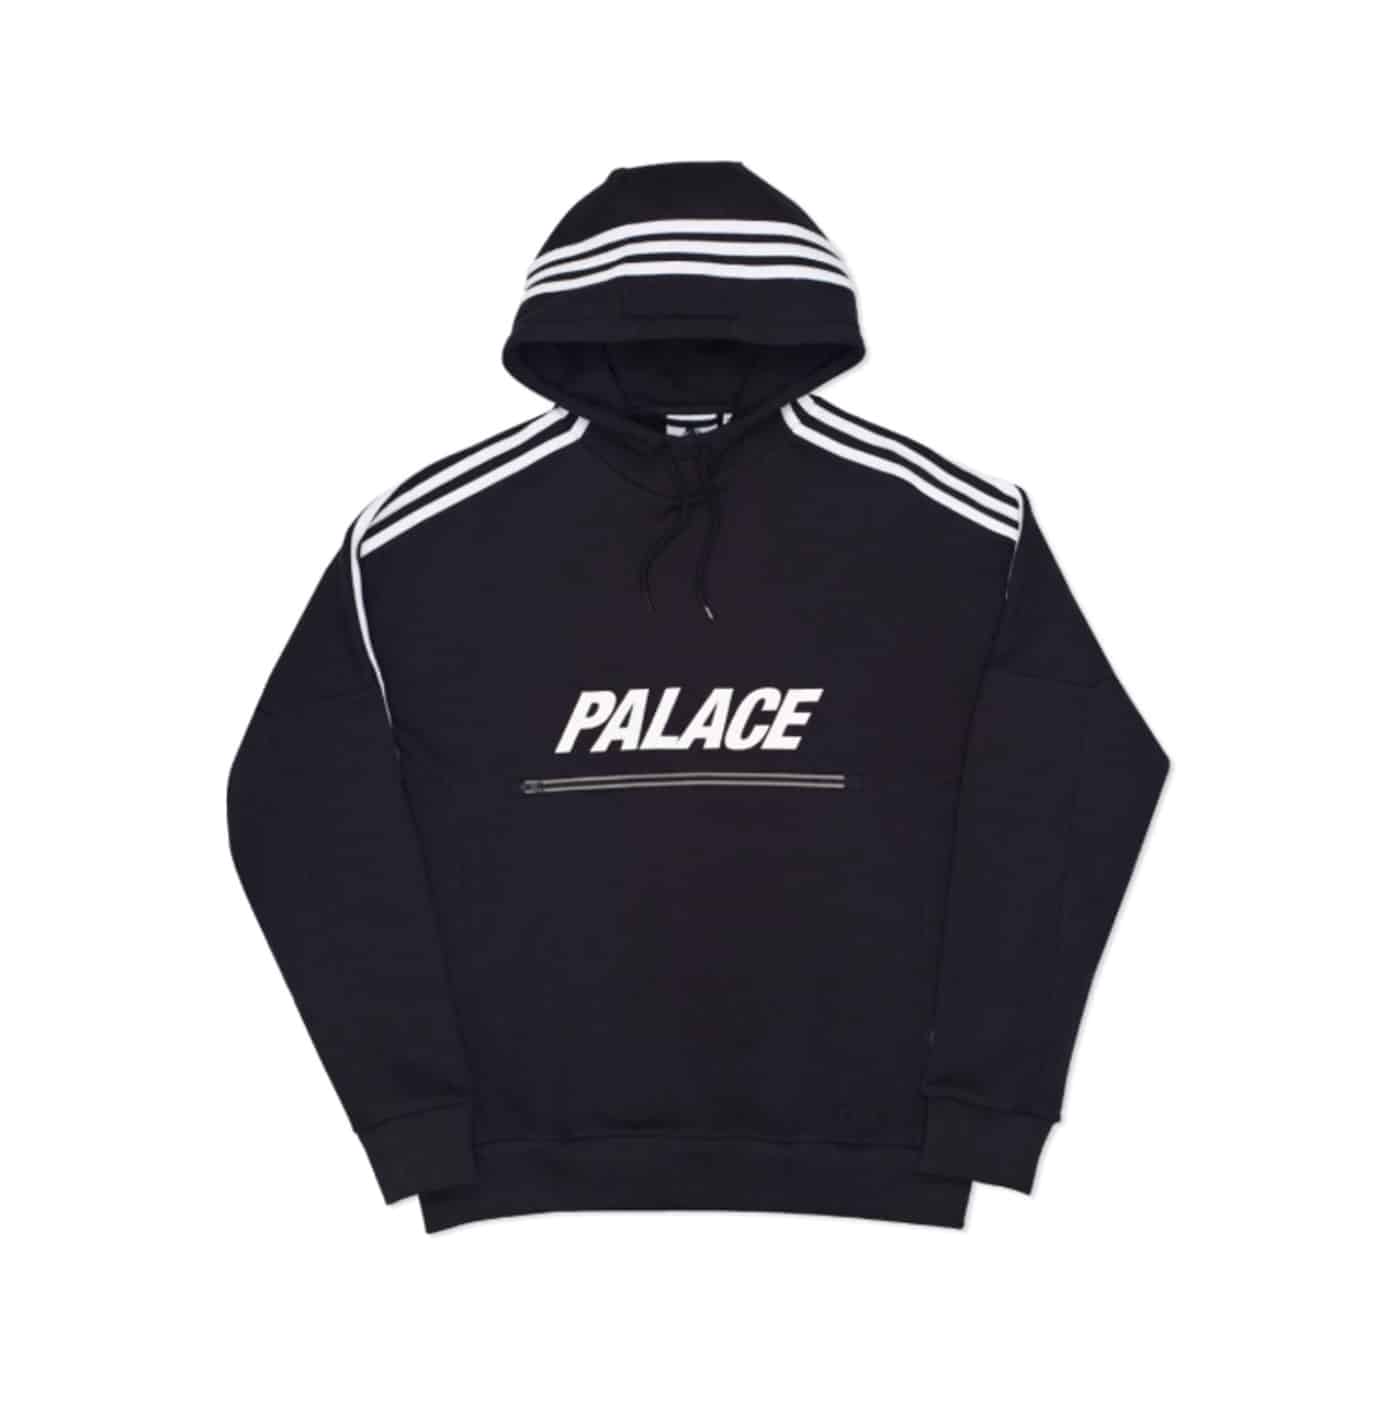 Palace x Adidas Track Top Hoodie Black/White